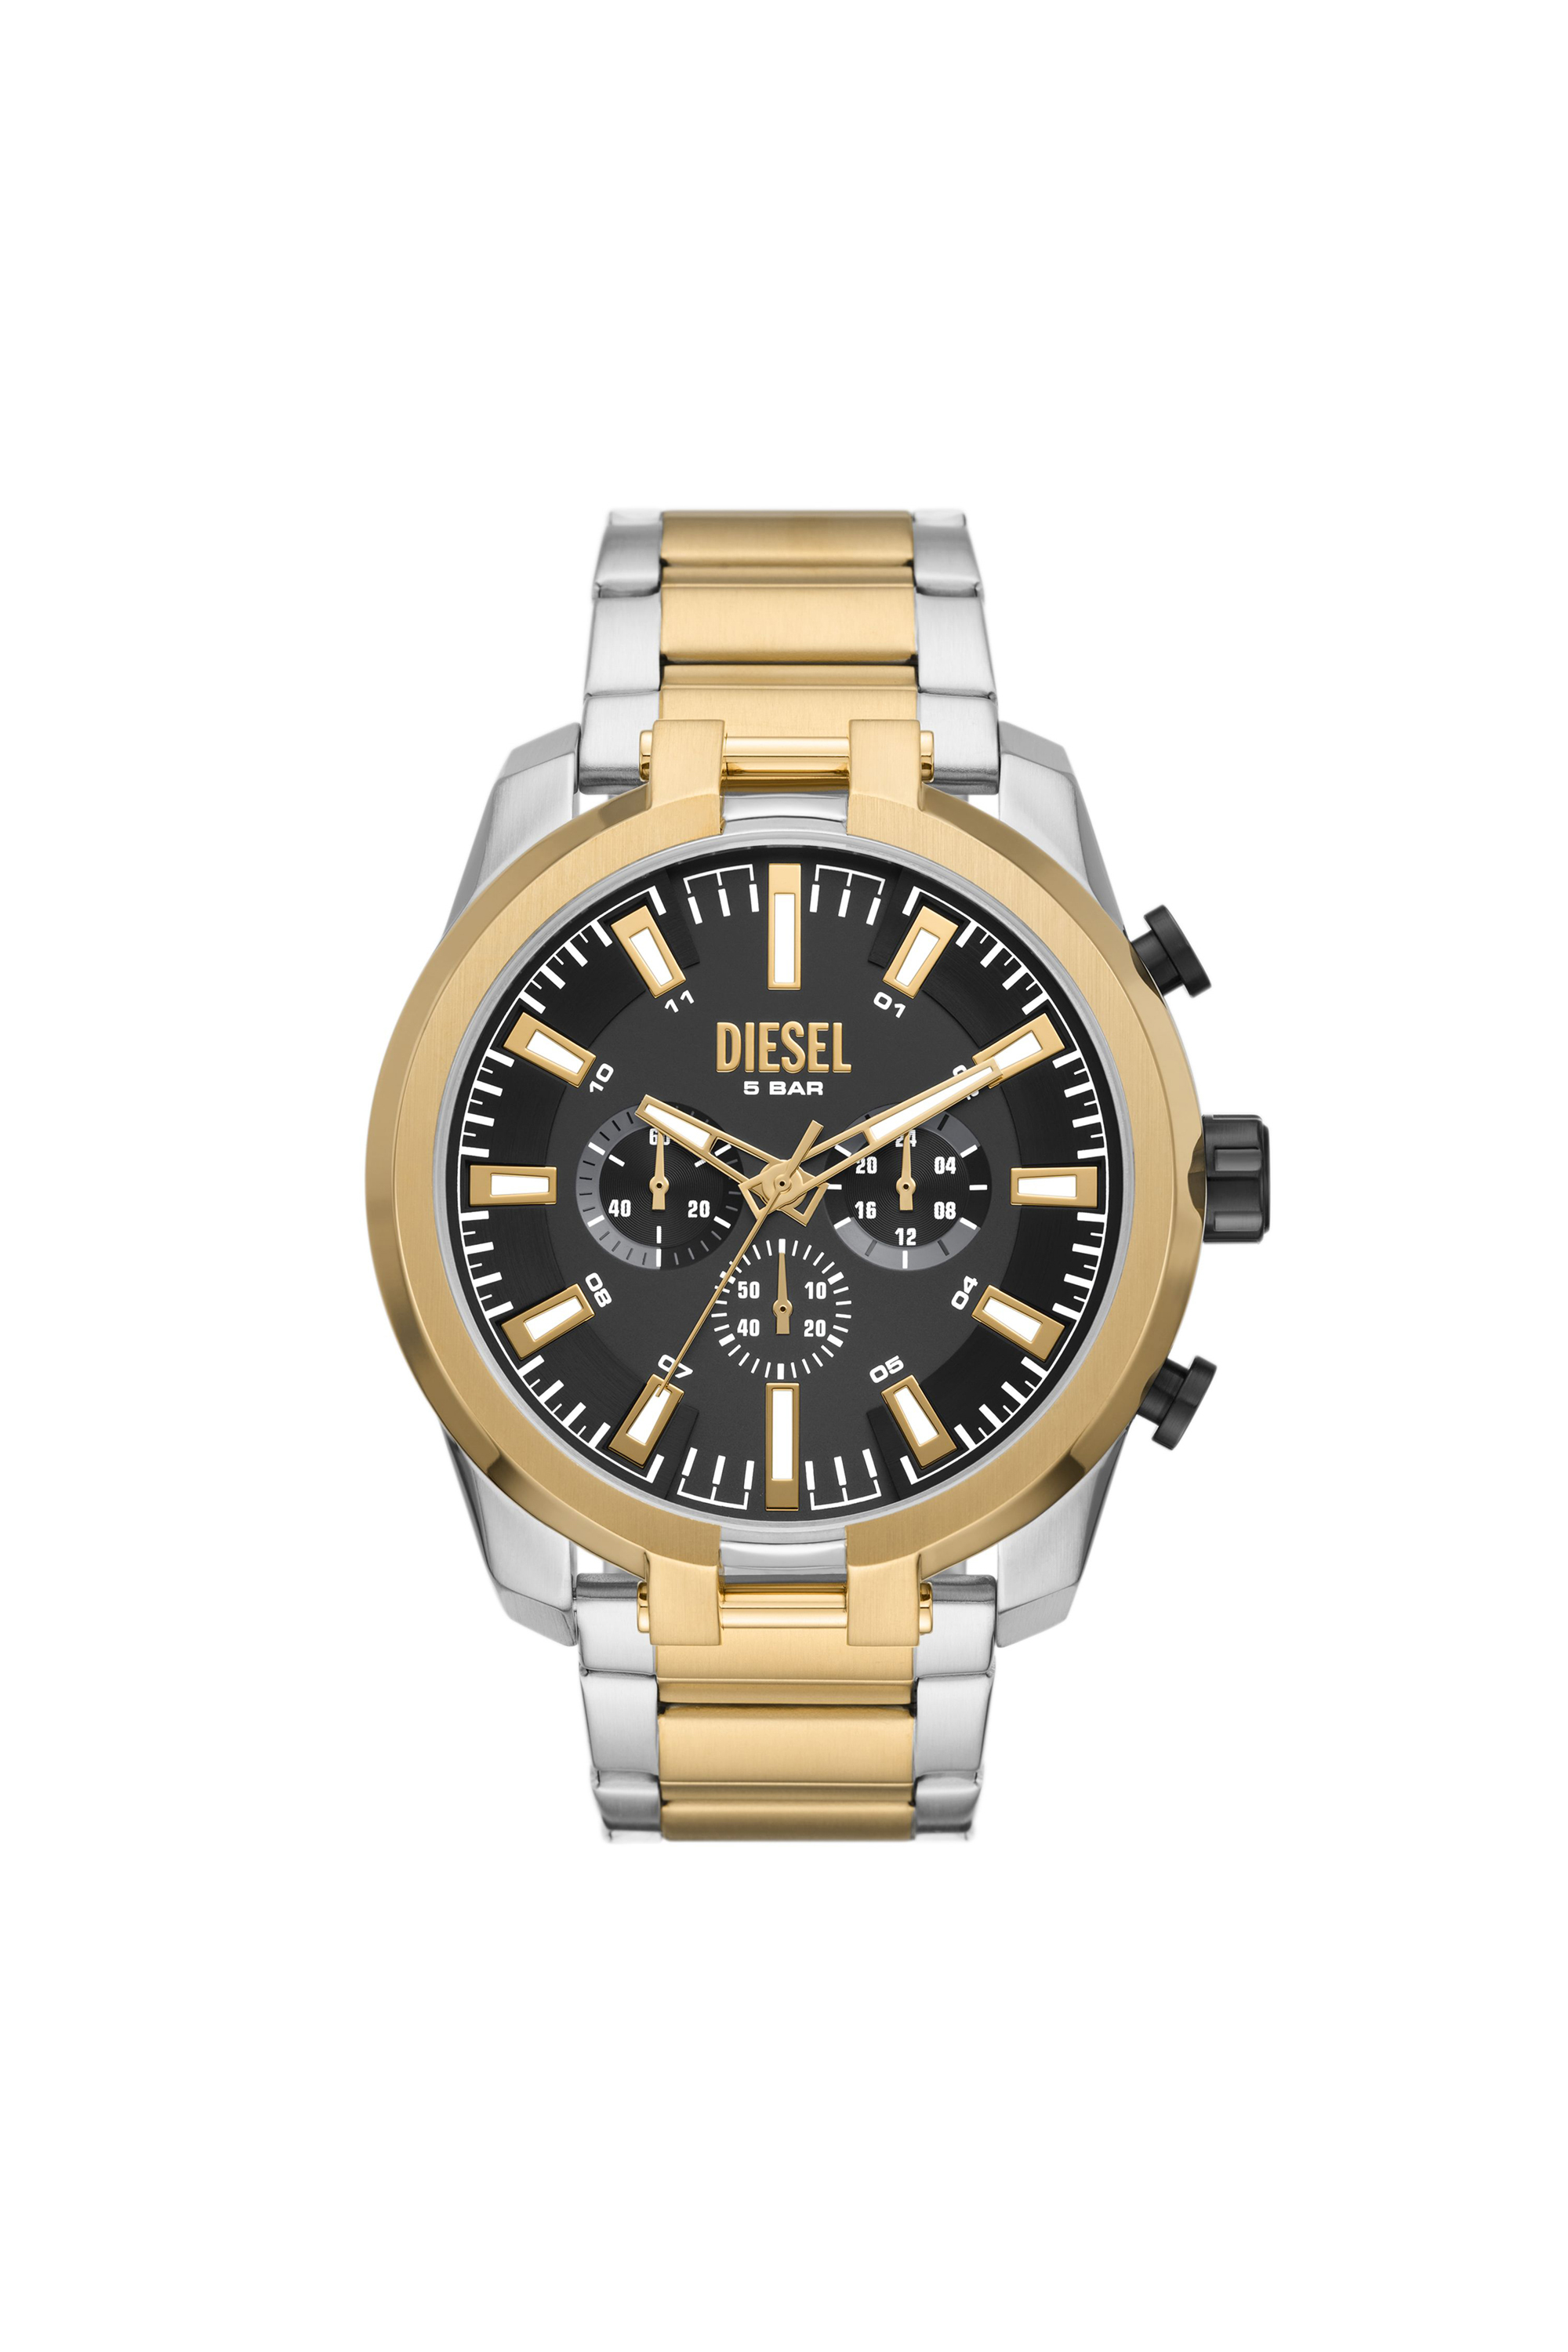 MS9 two-tone three-hand steel watch date | Men\'s DZ2196 Diesel stainless